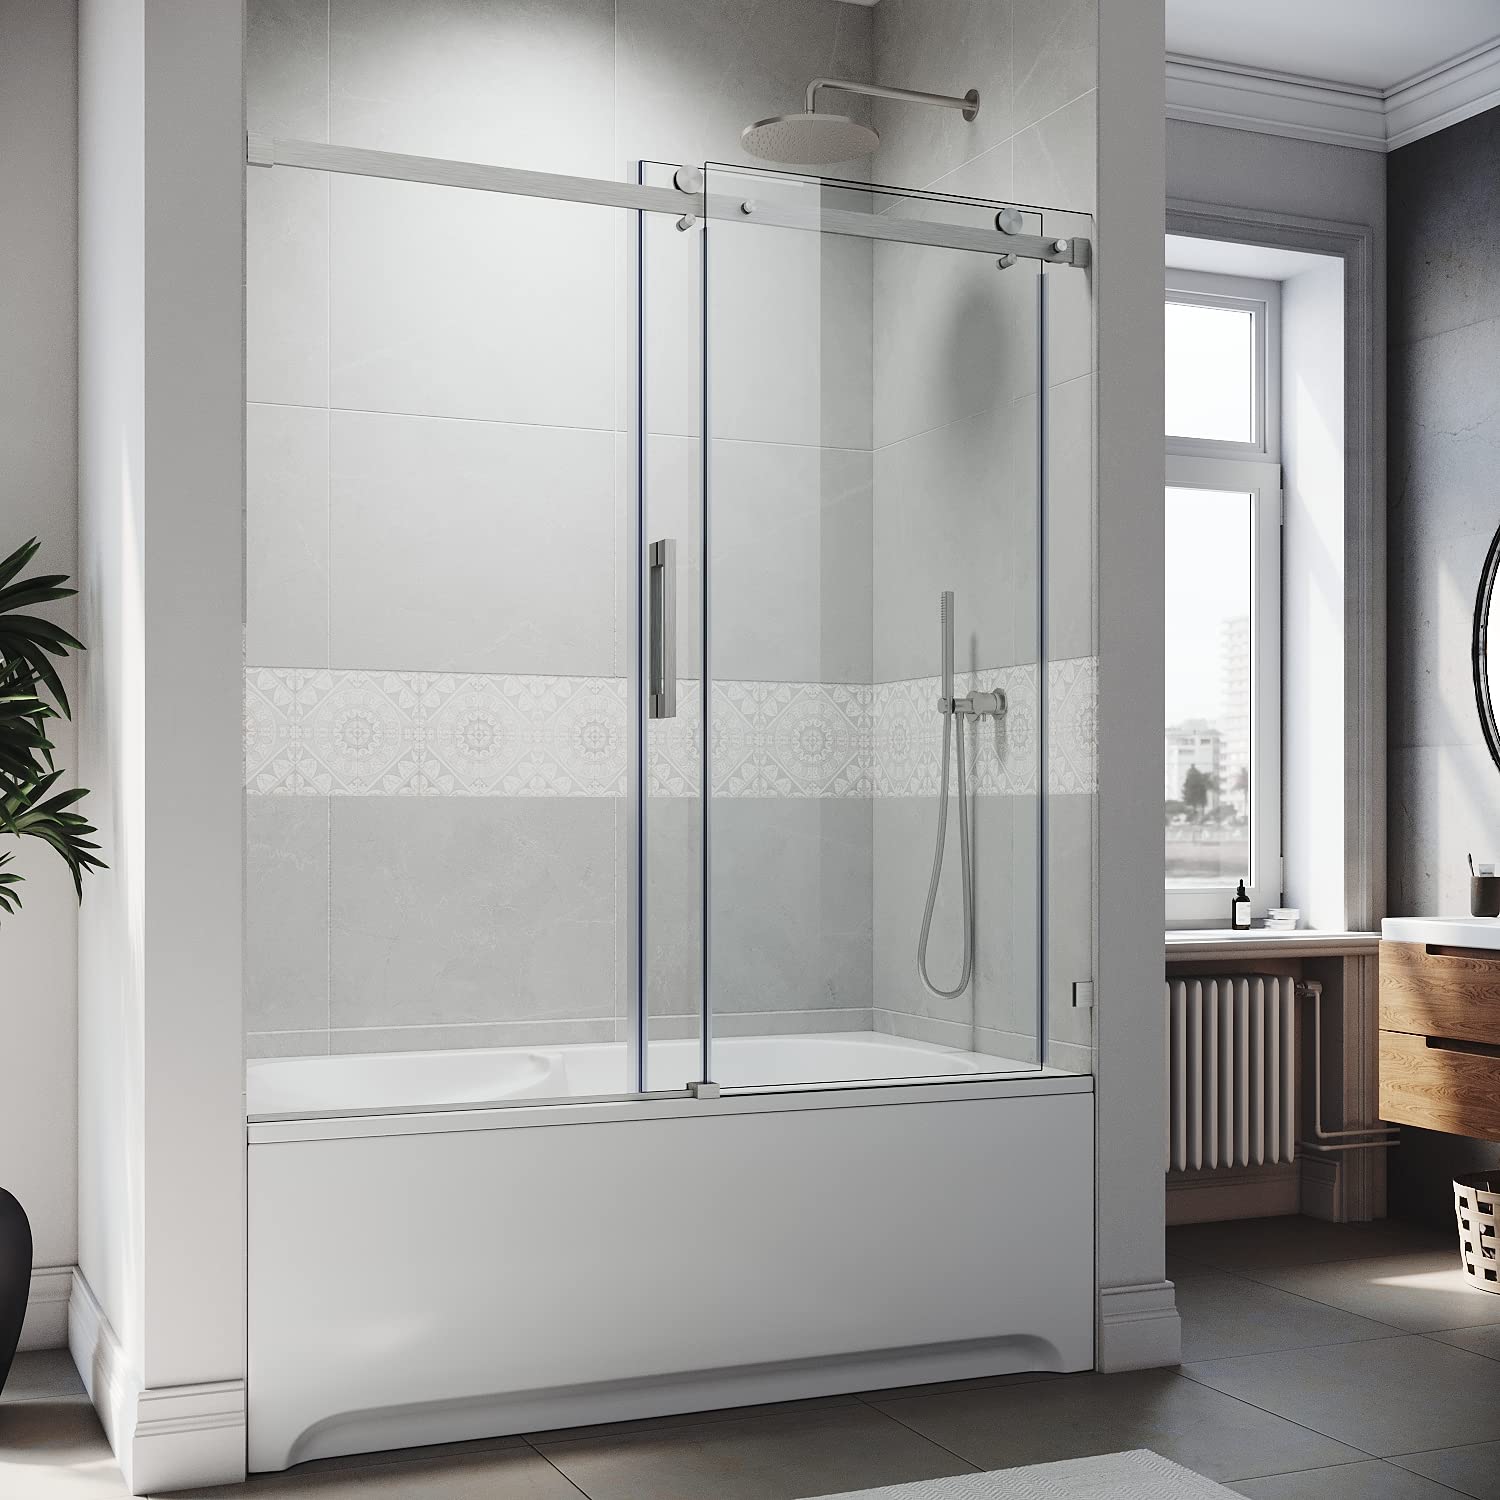 Sunny Shower Fully 60 W x 72 H Frameless Sliding Shower Doors, 3/8 Clear Glass, Brushed Nickel Finish, Stainless Steel Hardware